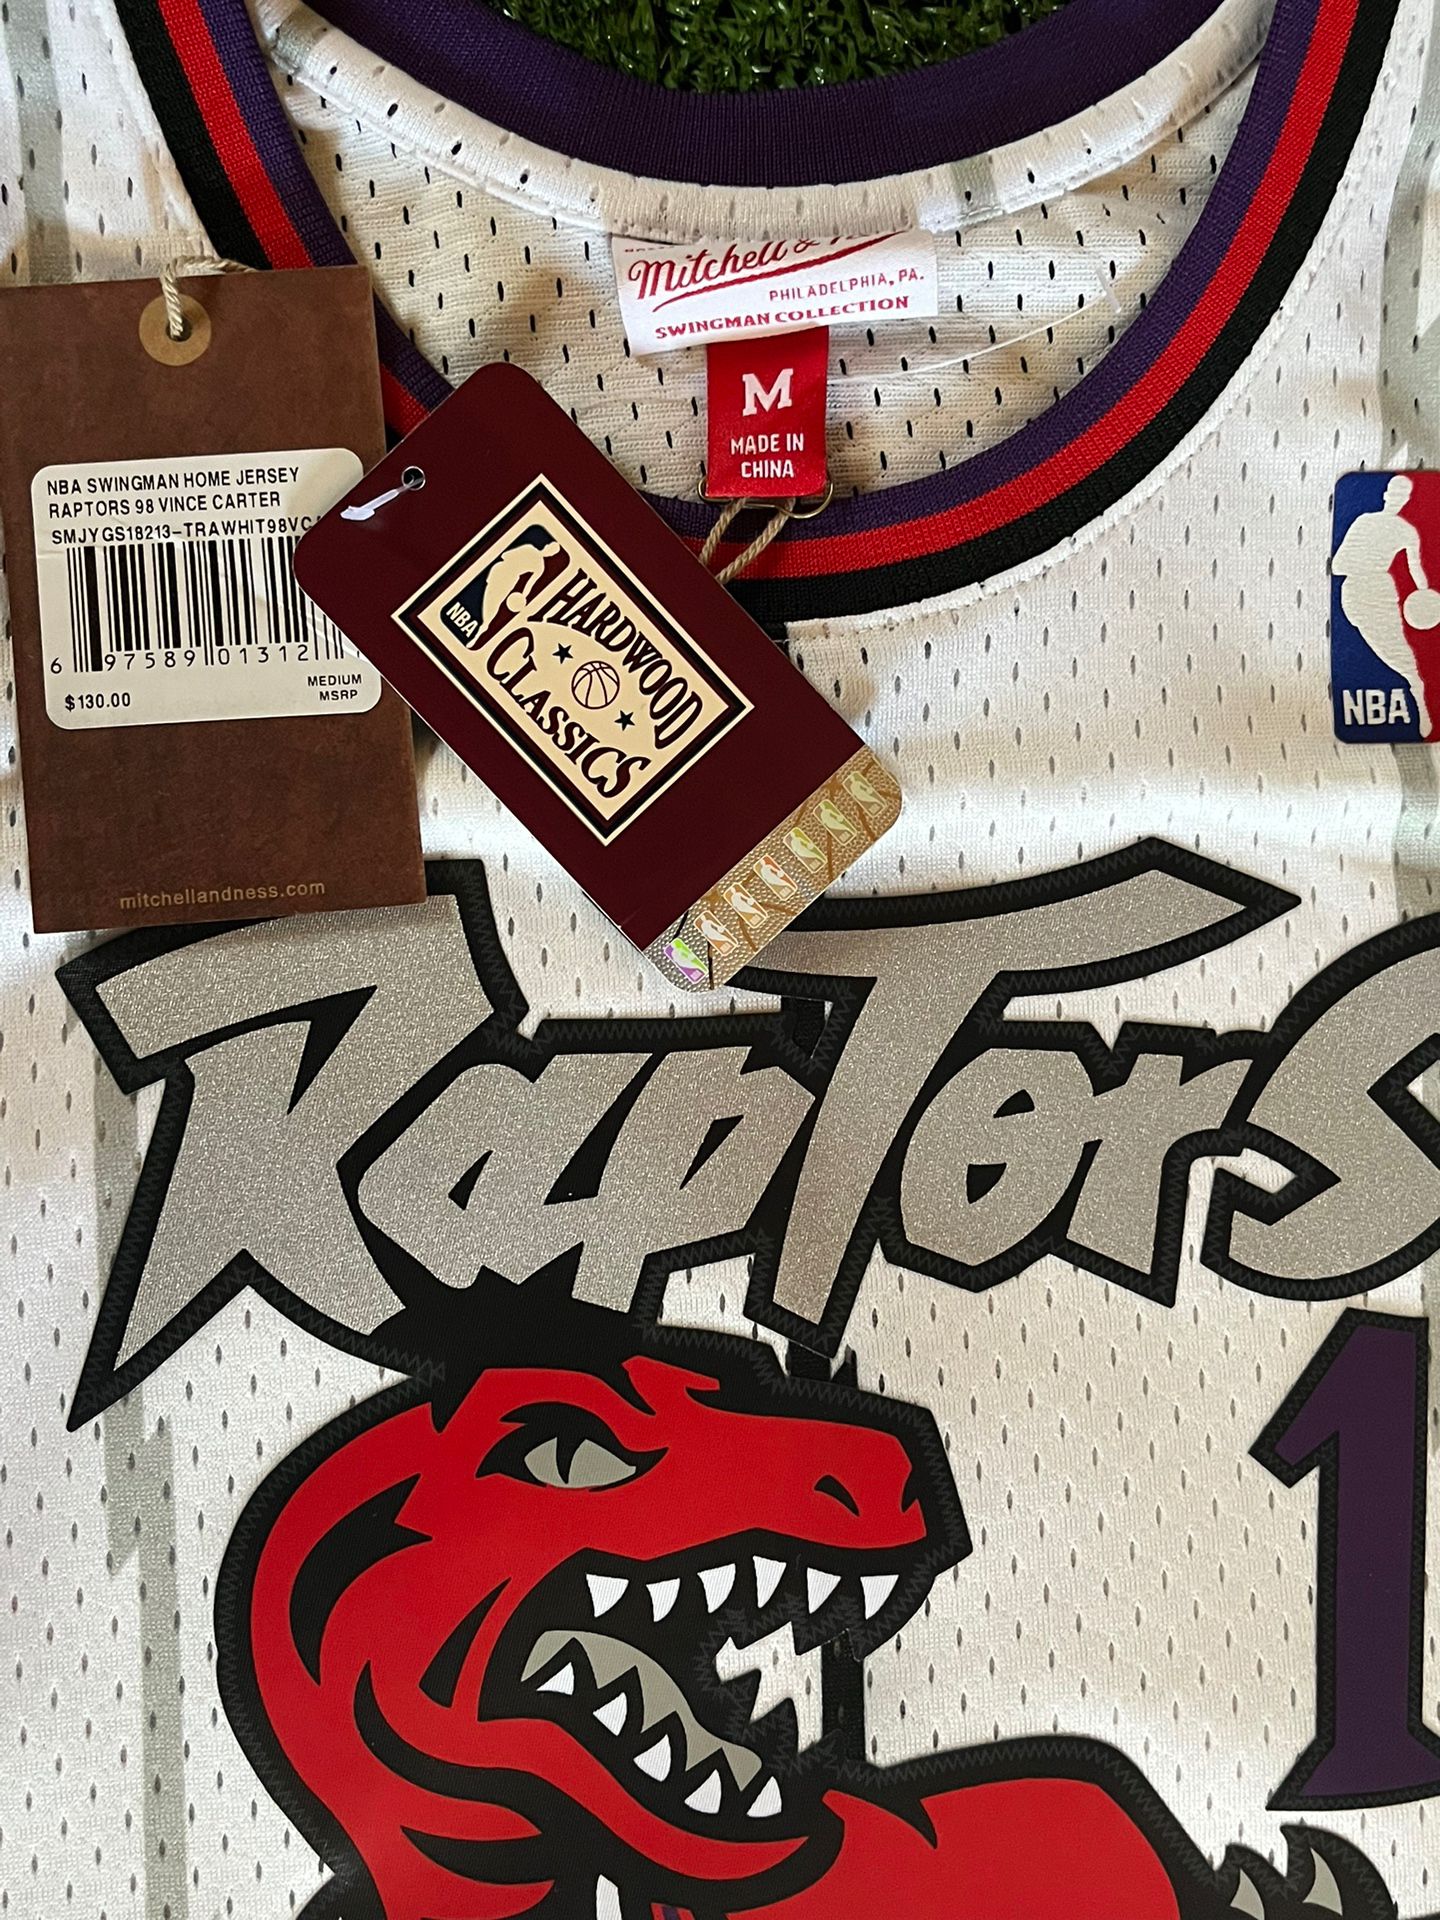 NBA Raptors Jersey and Raptor Throwback Jersey –